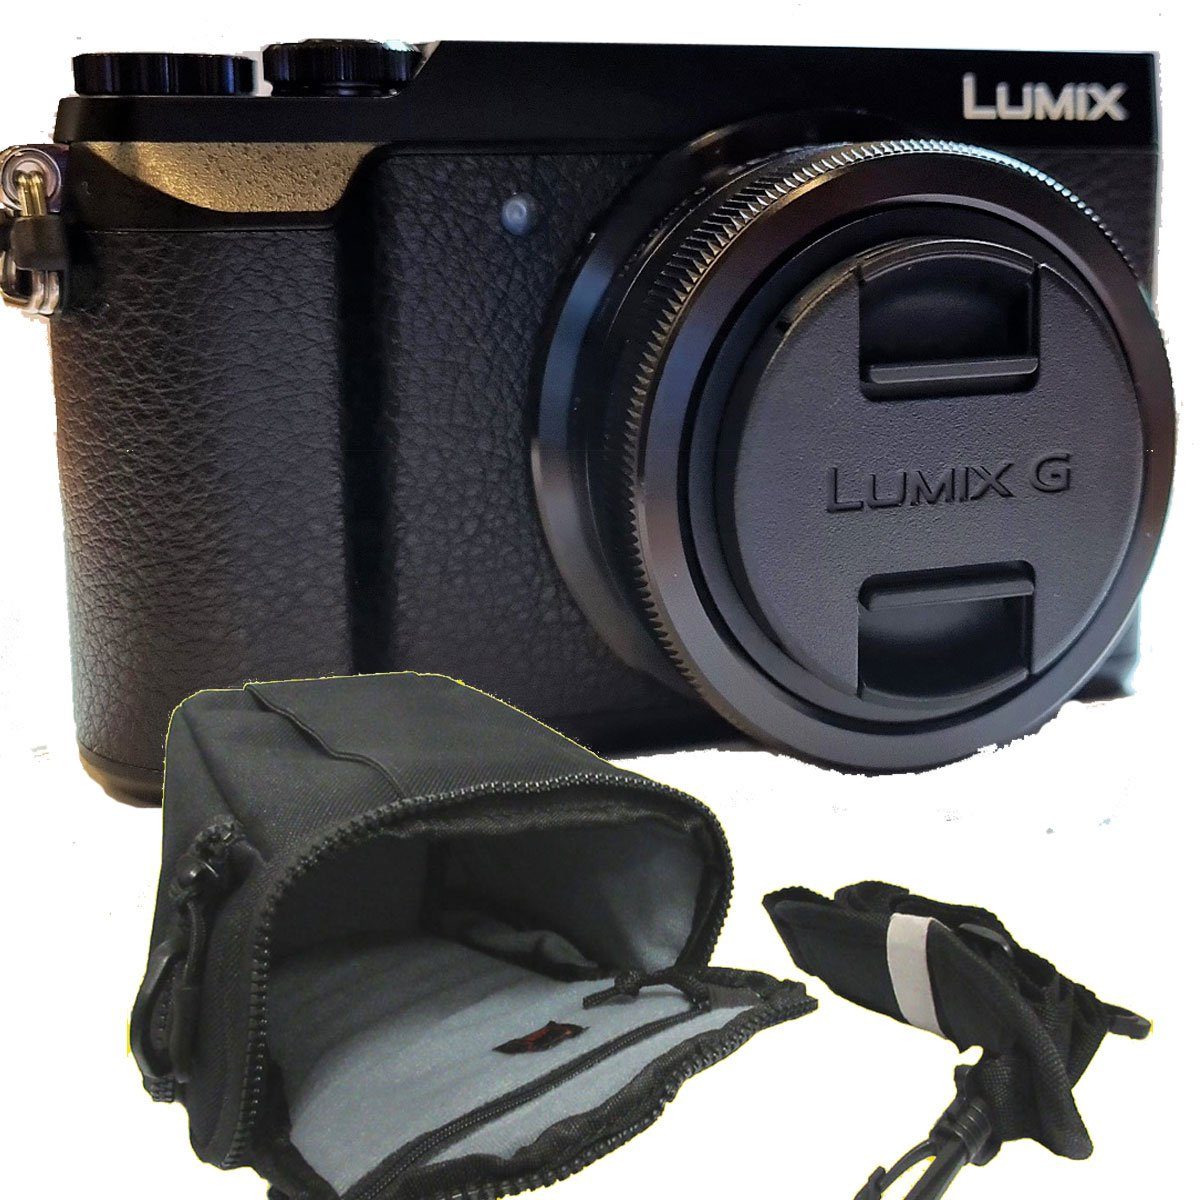 Set schwarz inklusive mm Panasonic Panasonic Lumix Kompaktkamera Tasche GX80+3,5-5,6/12-32